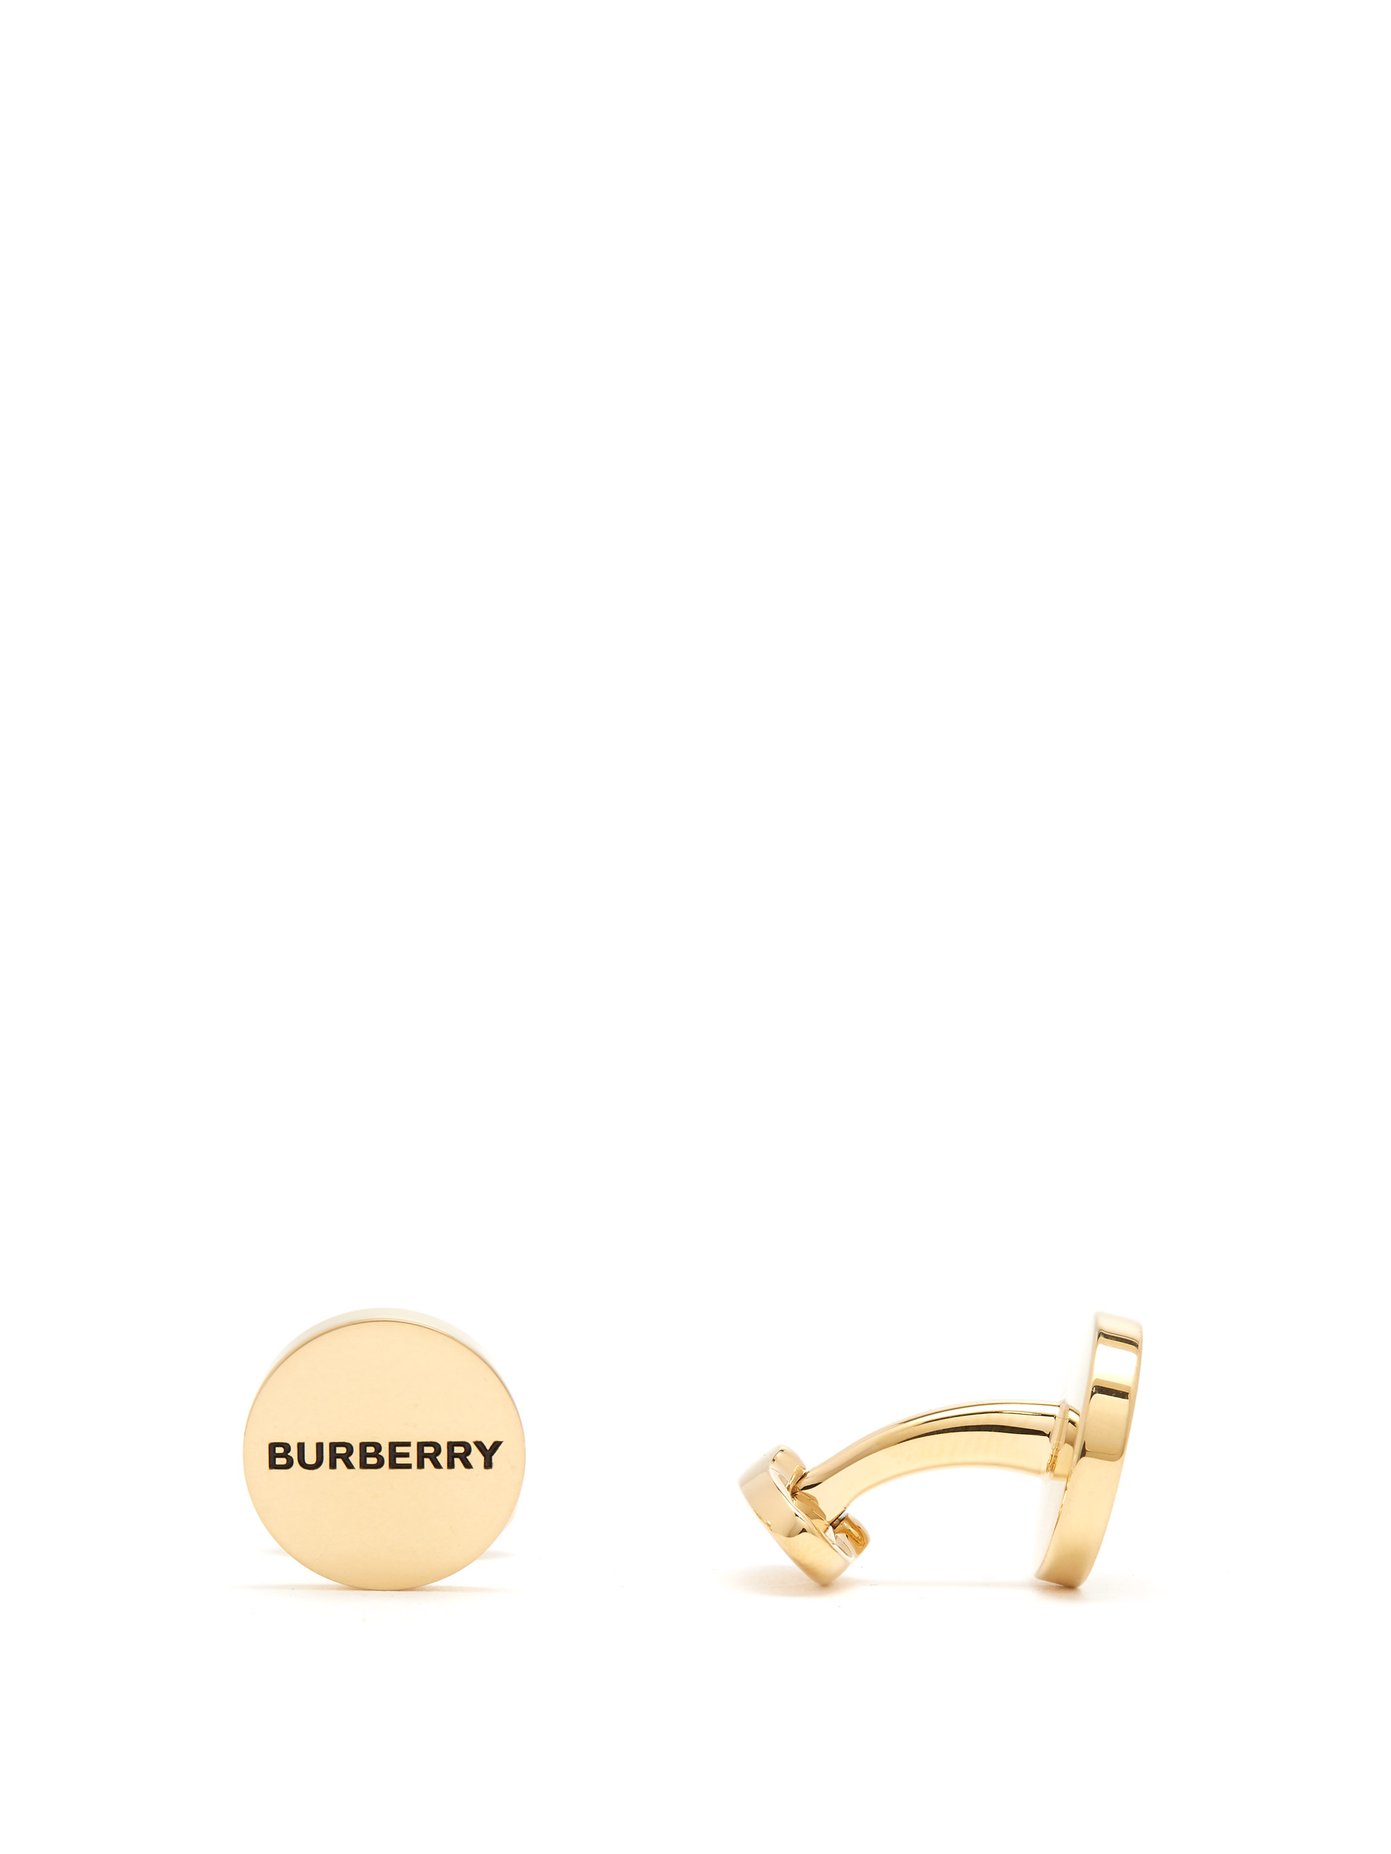 burberry cufflinks sale